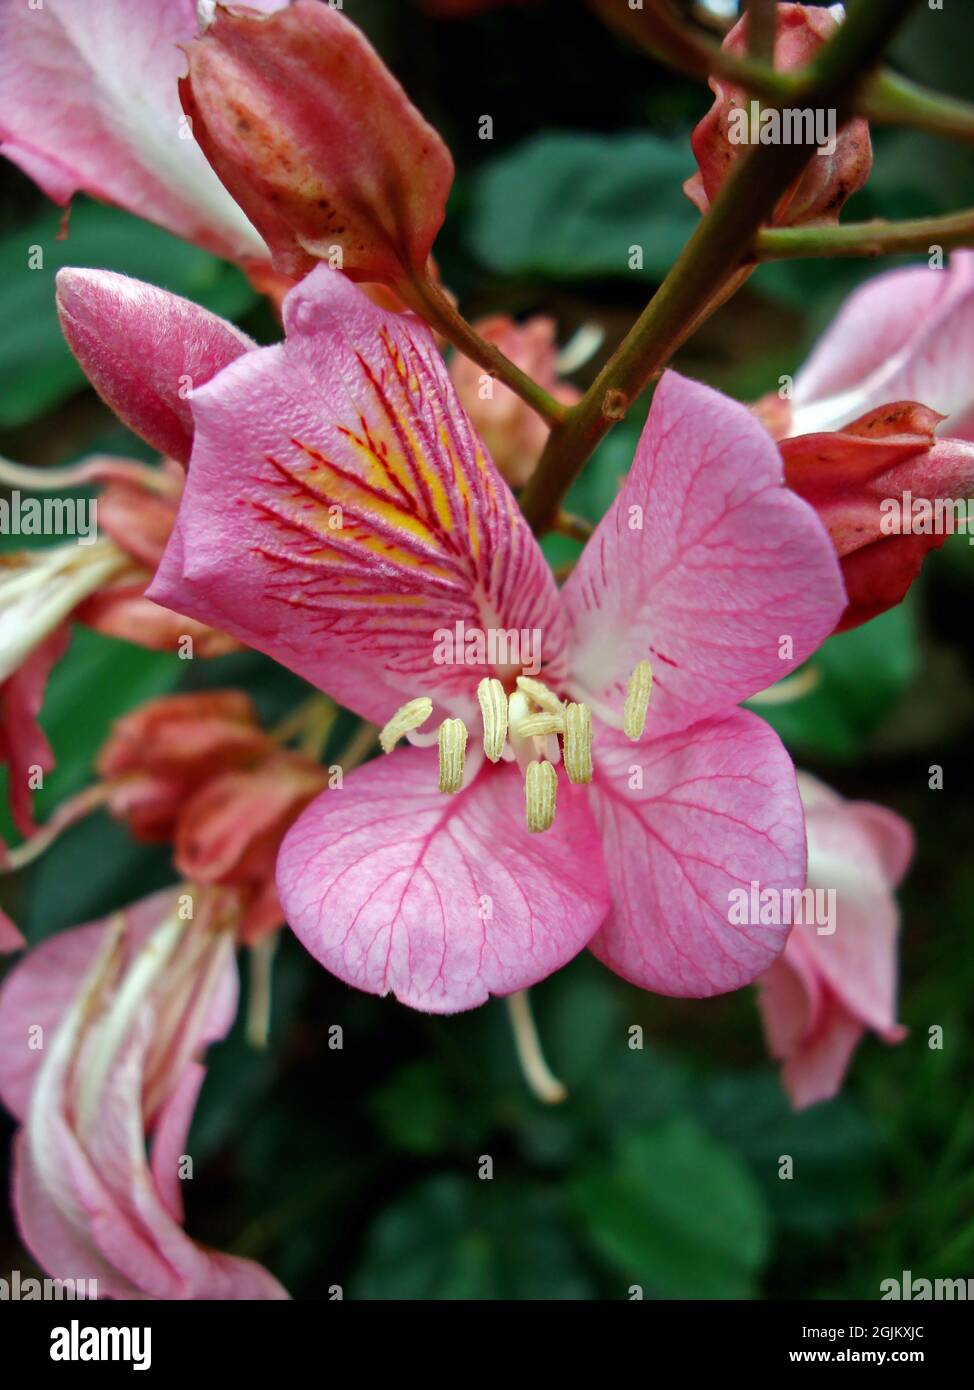 Pink flower (Bauhinia alata) on garden Stock Photo